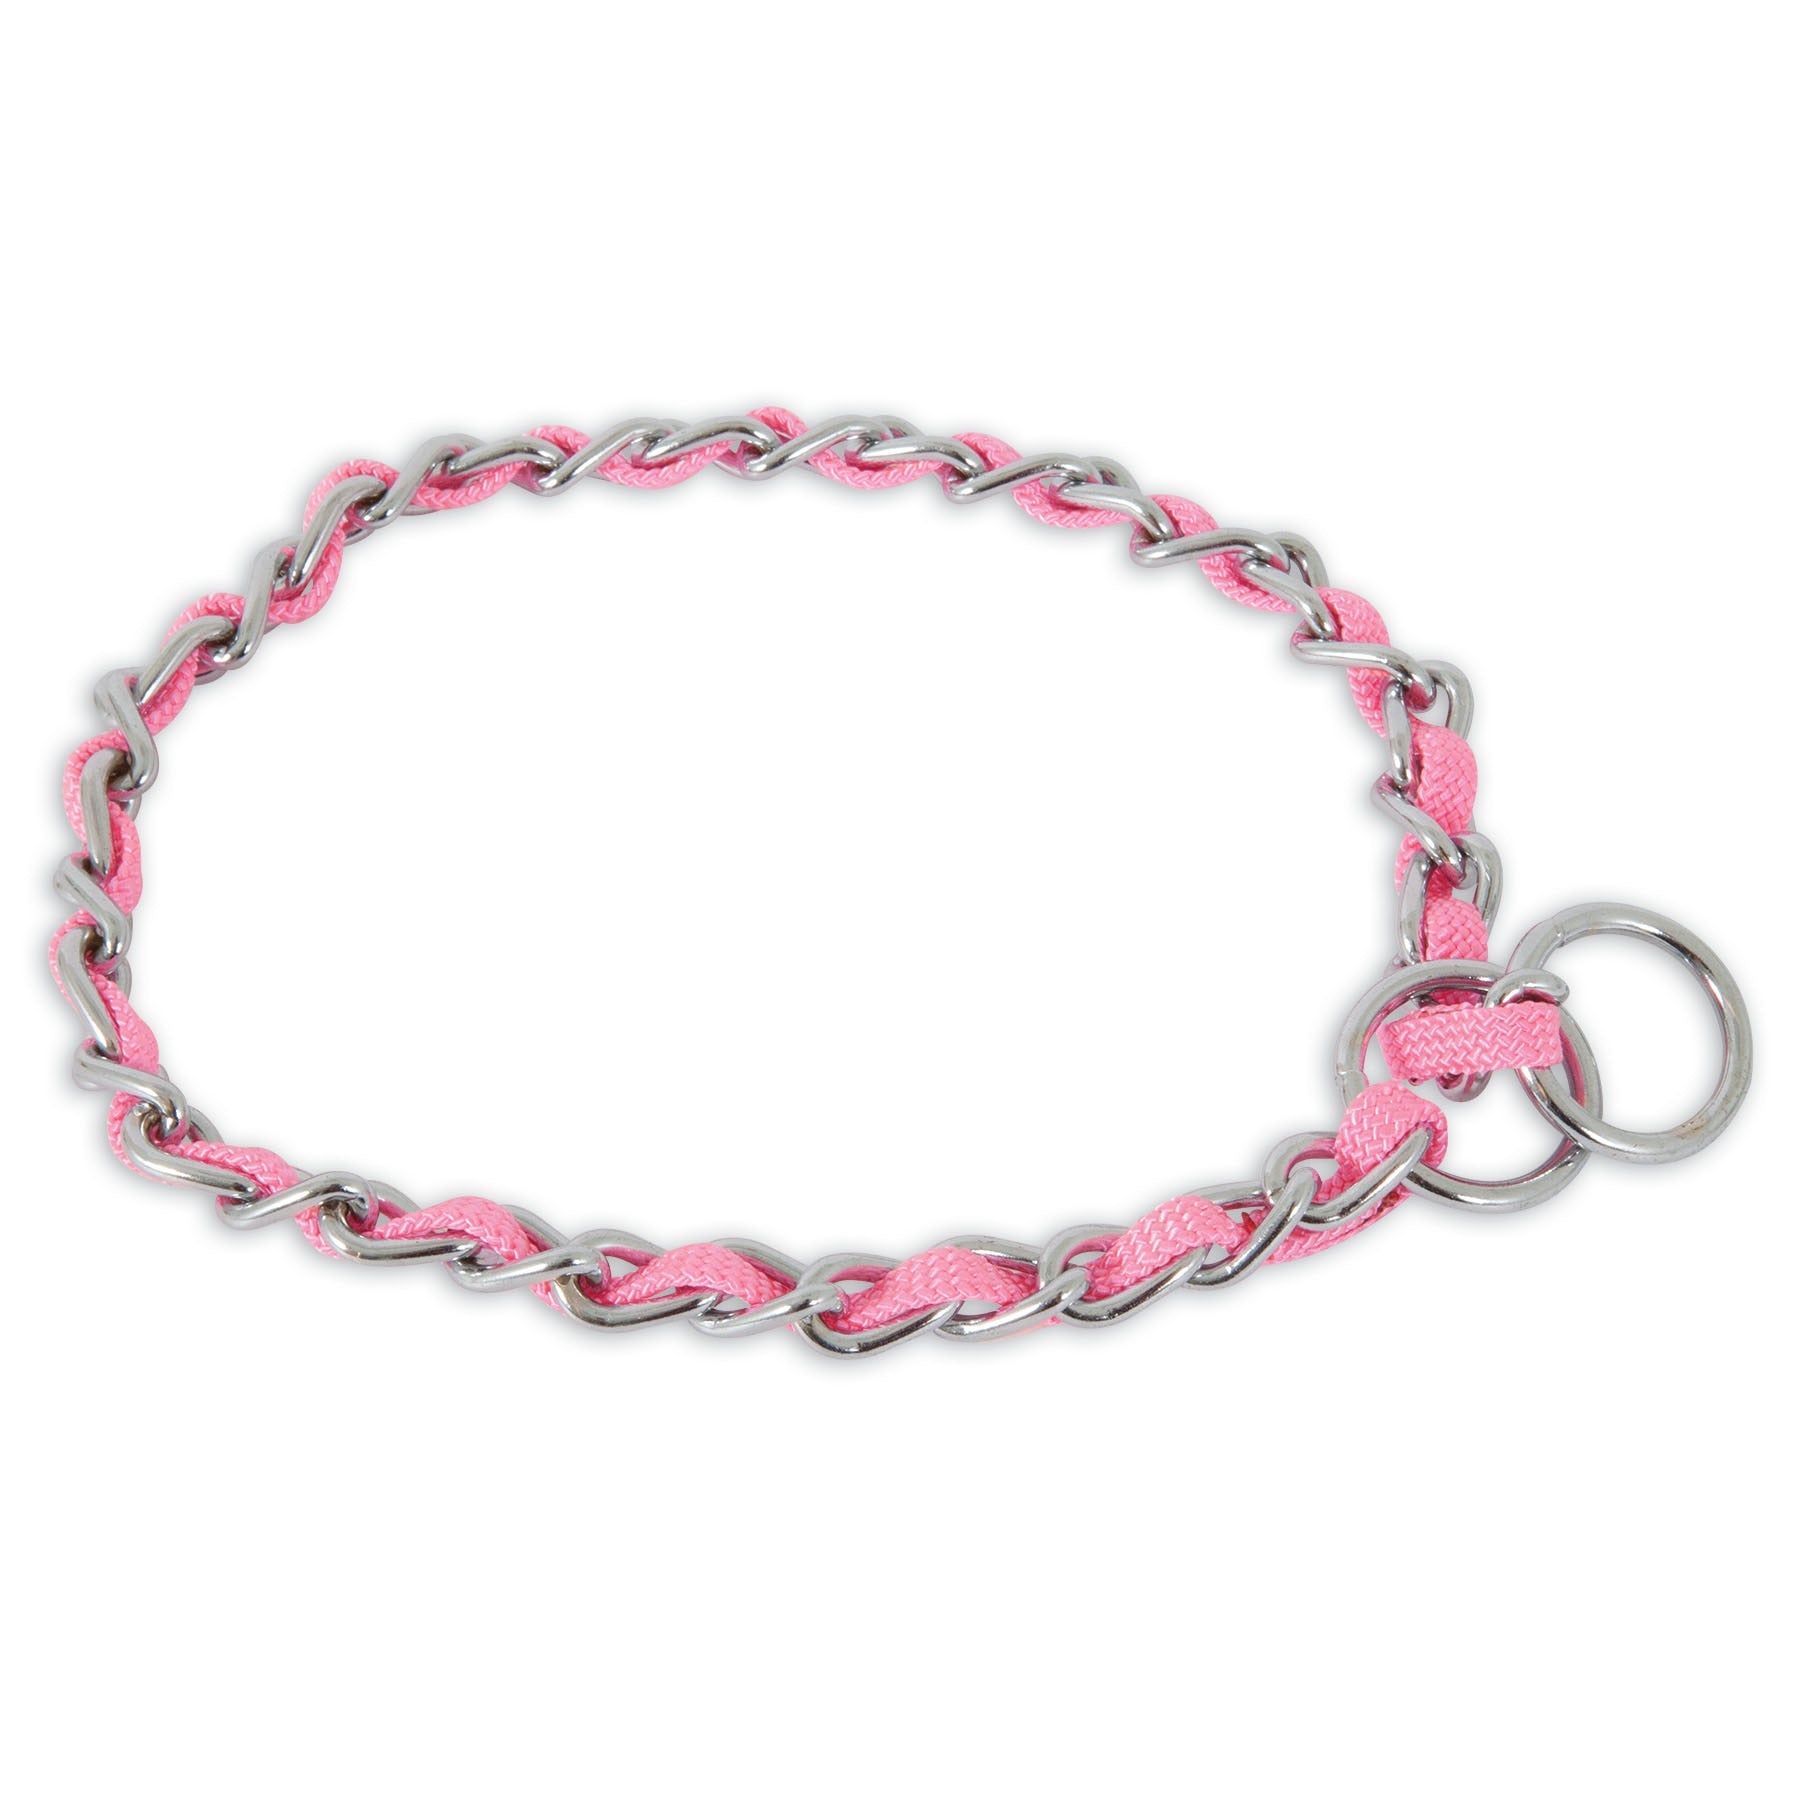 Petmate Comfort Chain Training Collar. SKUS: 83005,83018